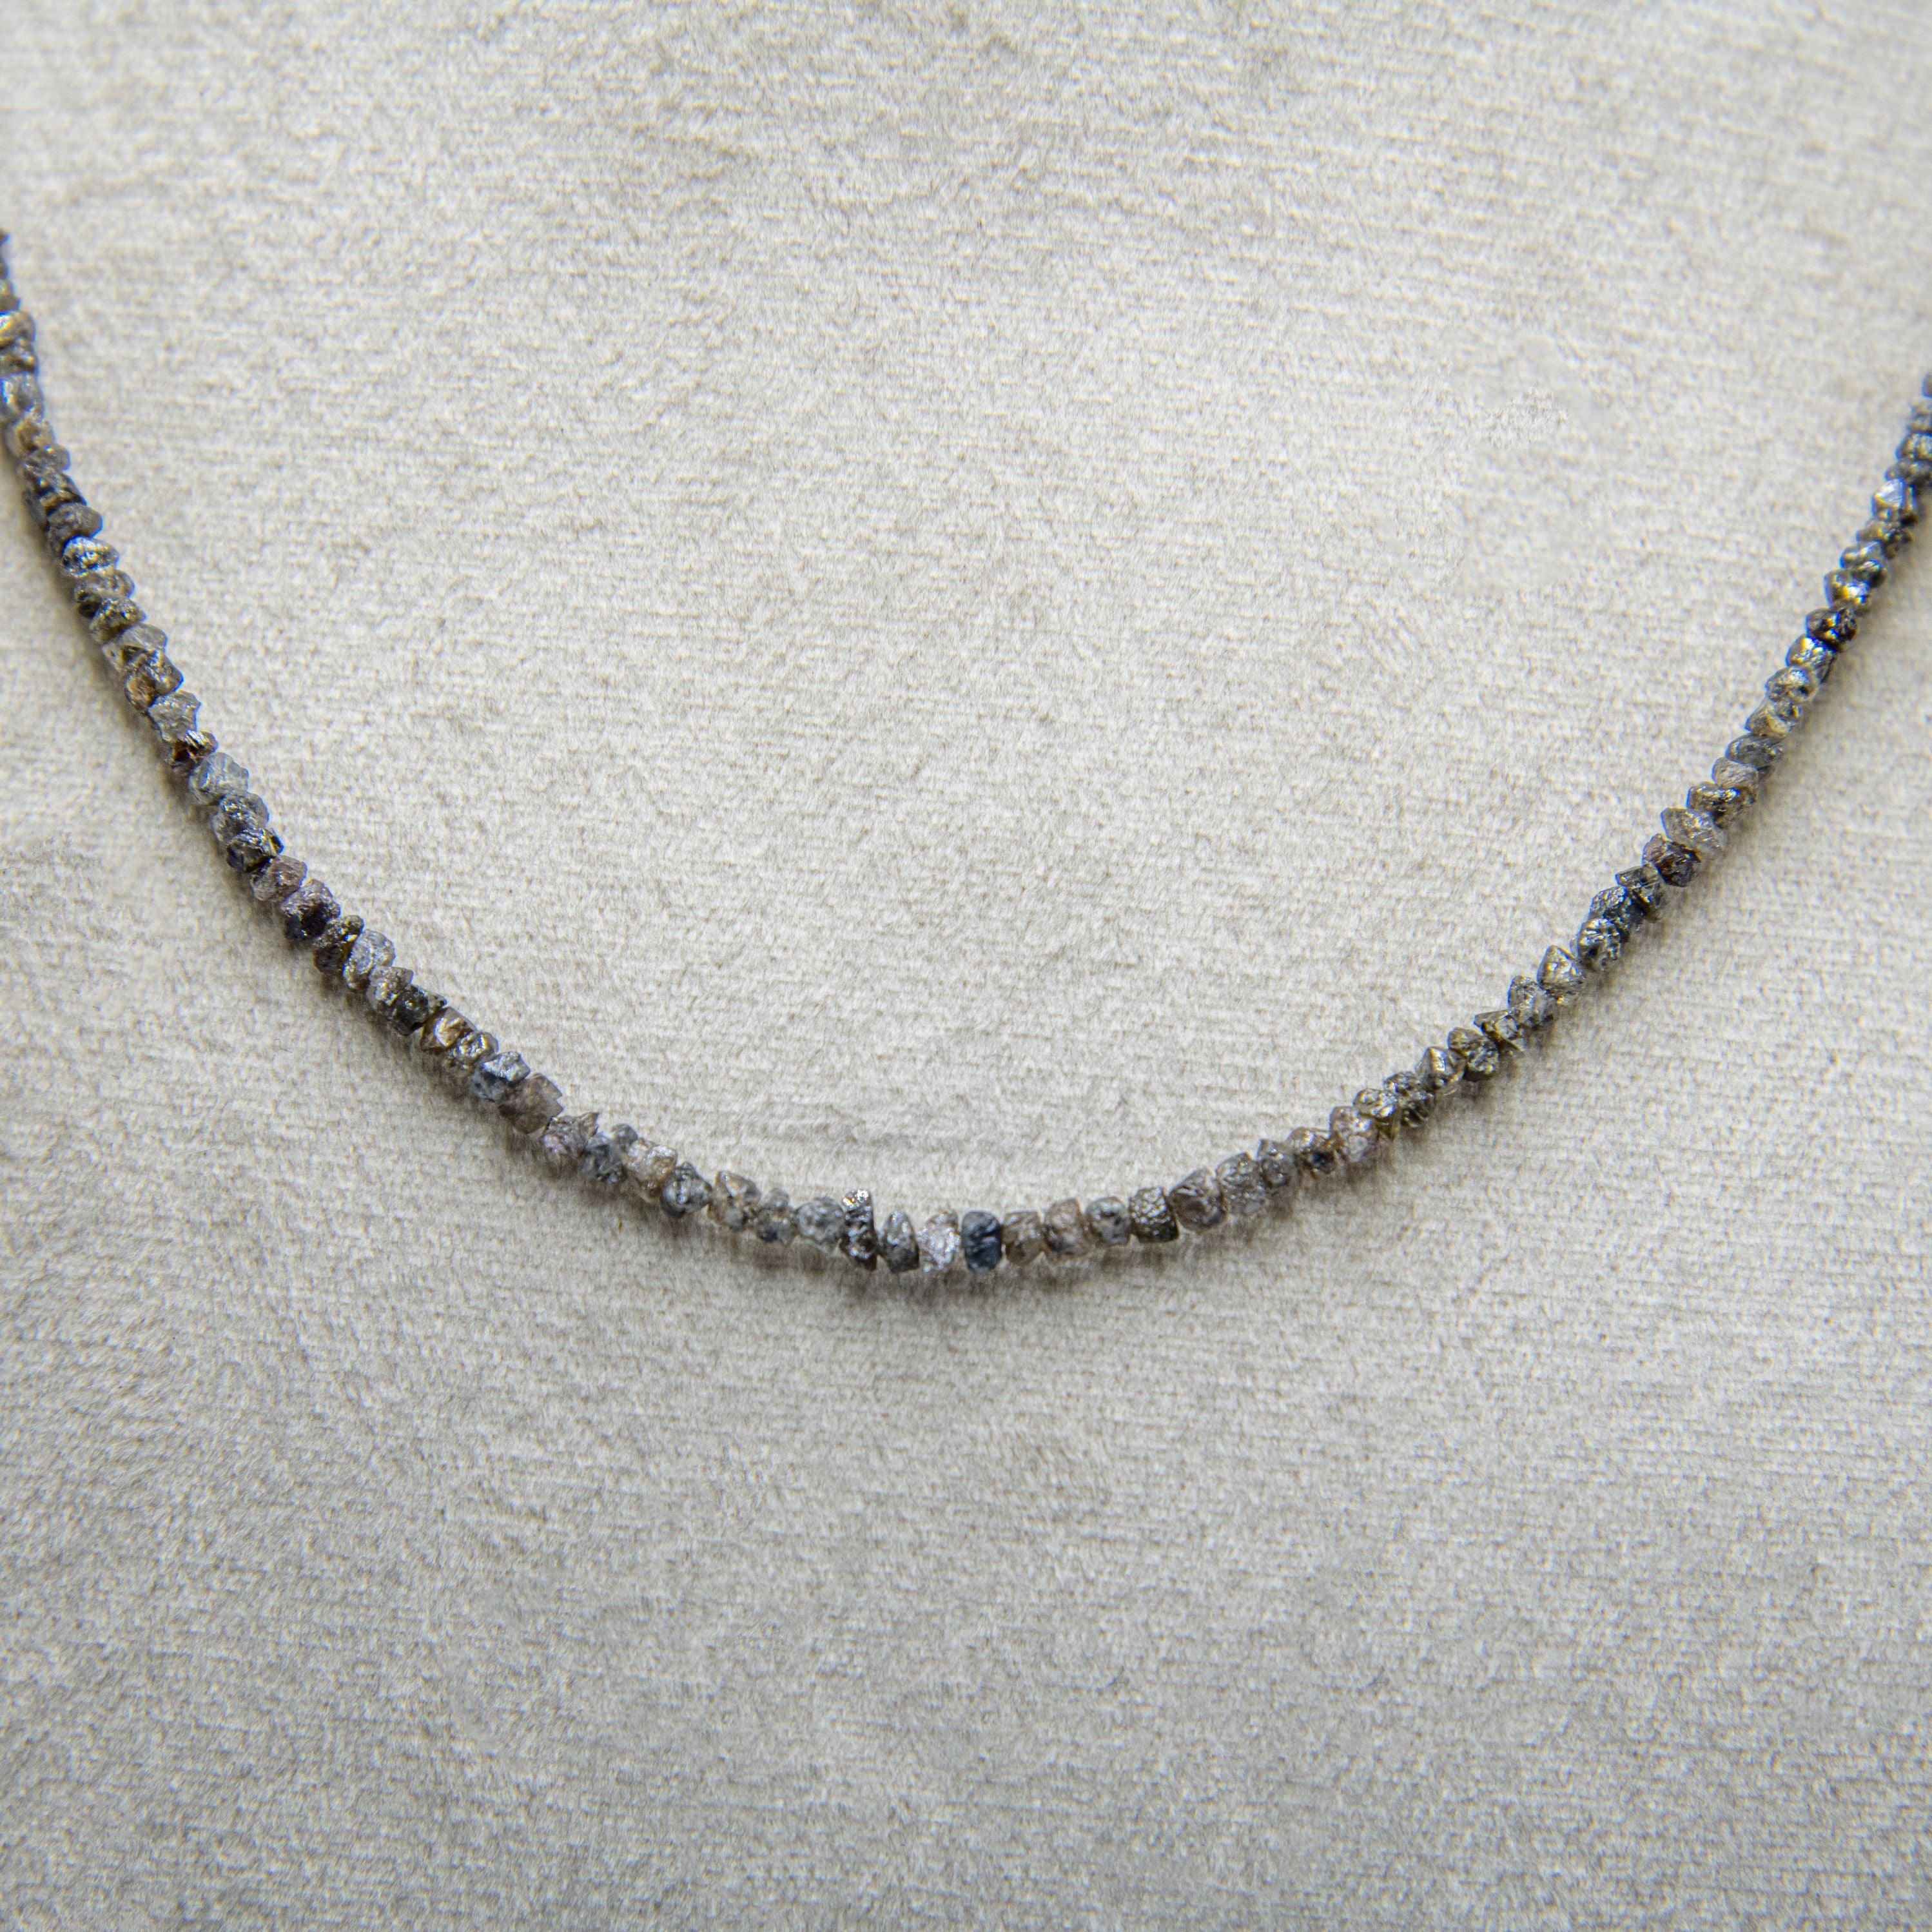 Black Diamond Faceted Roundelle Beads